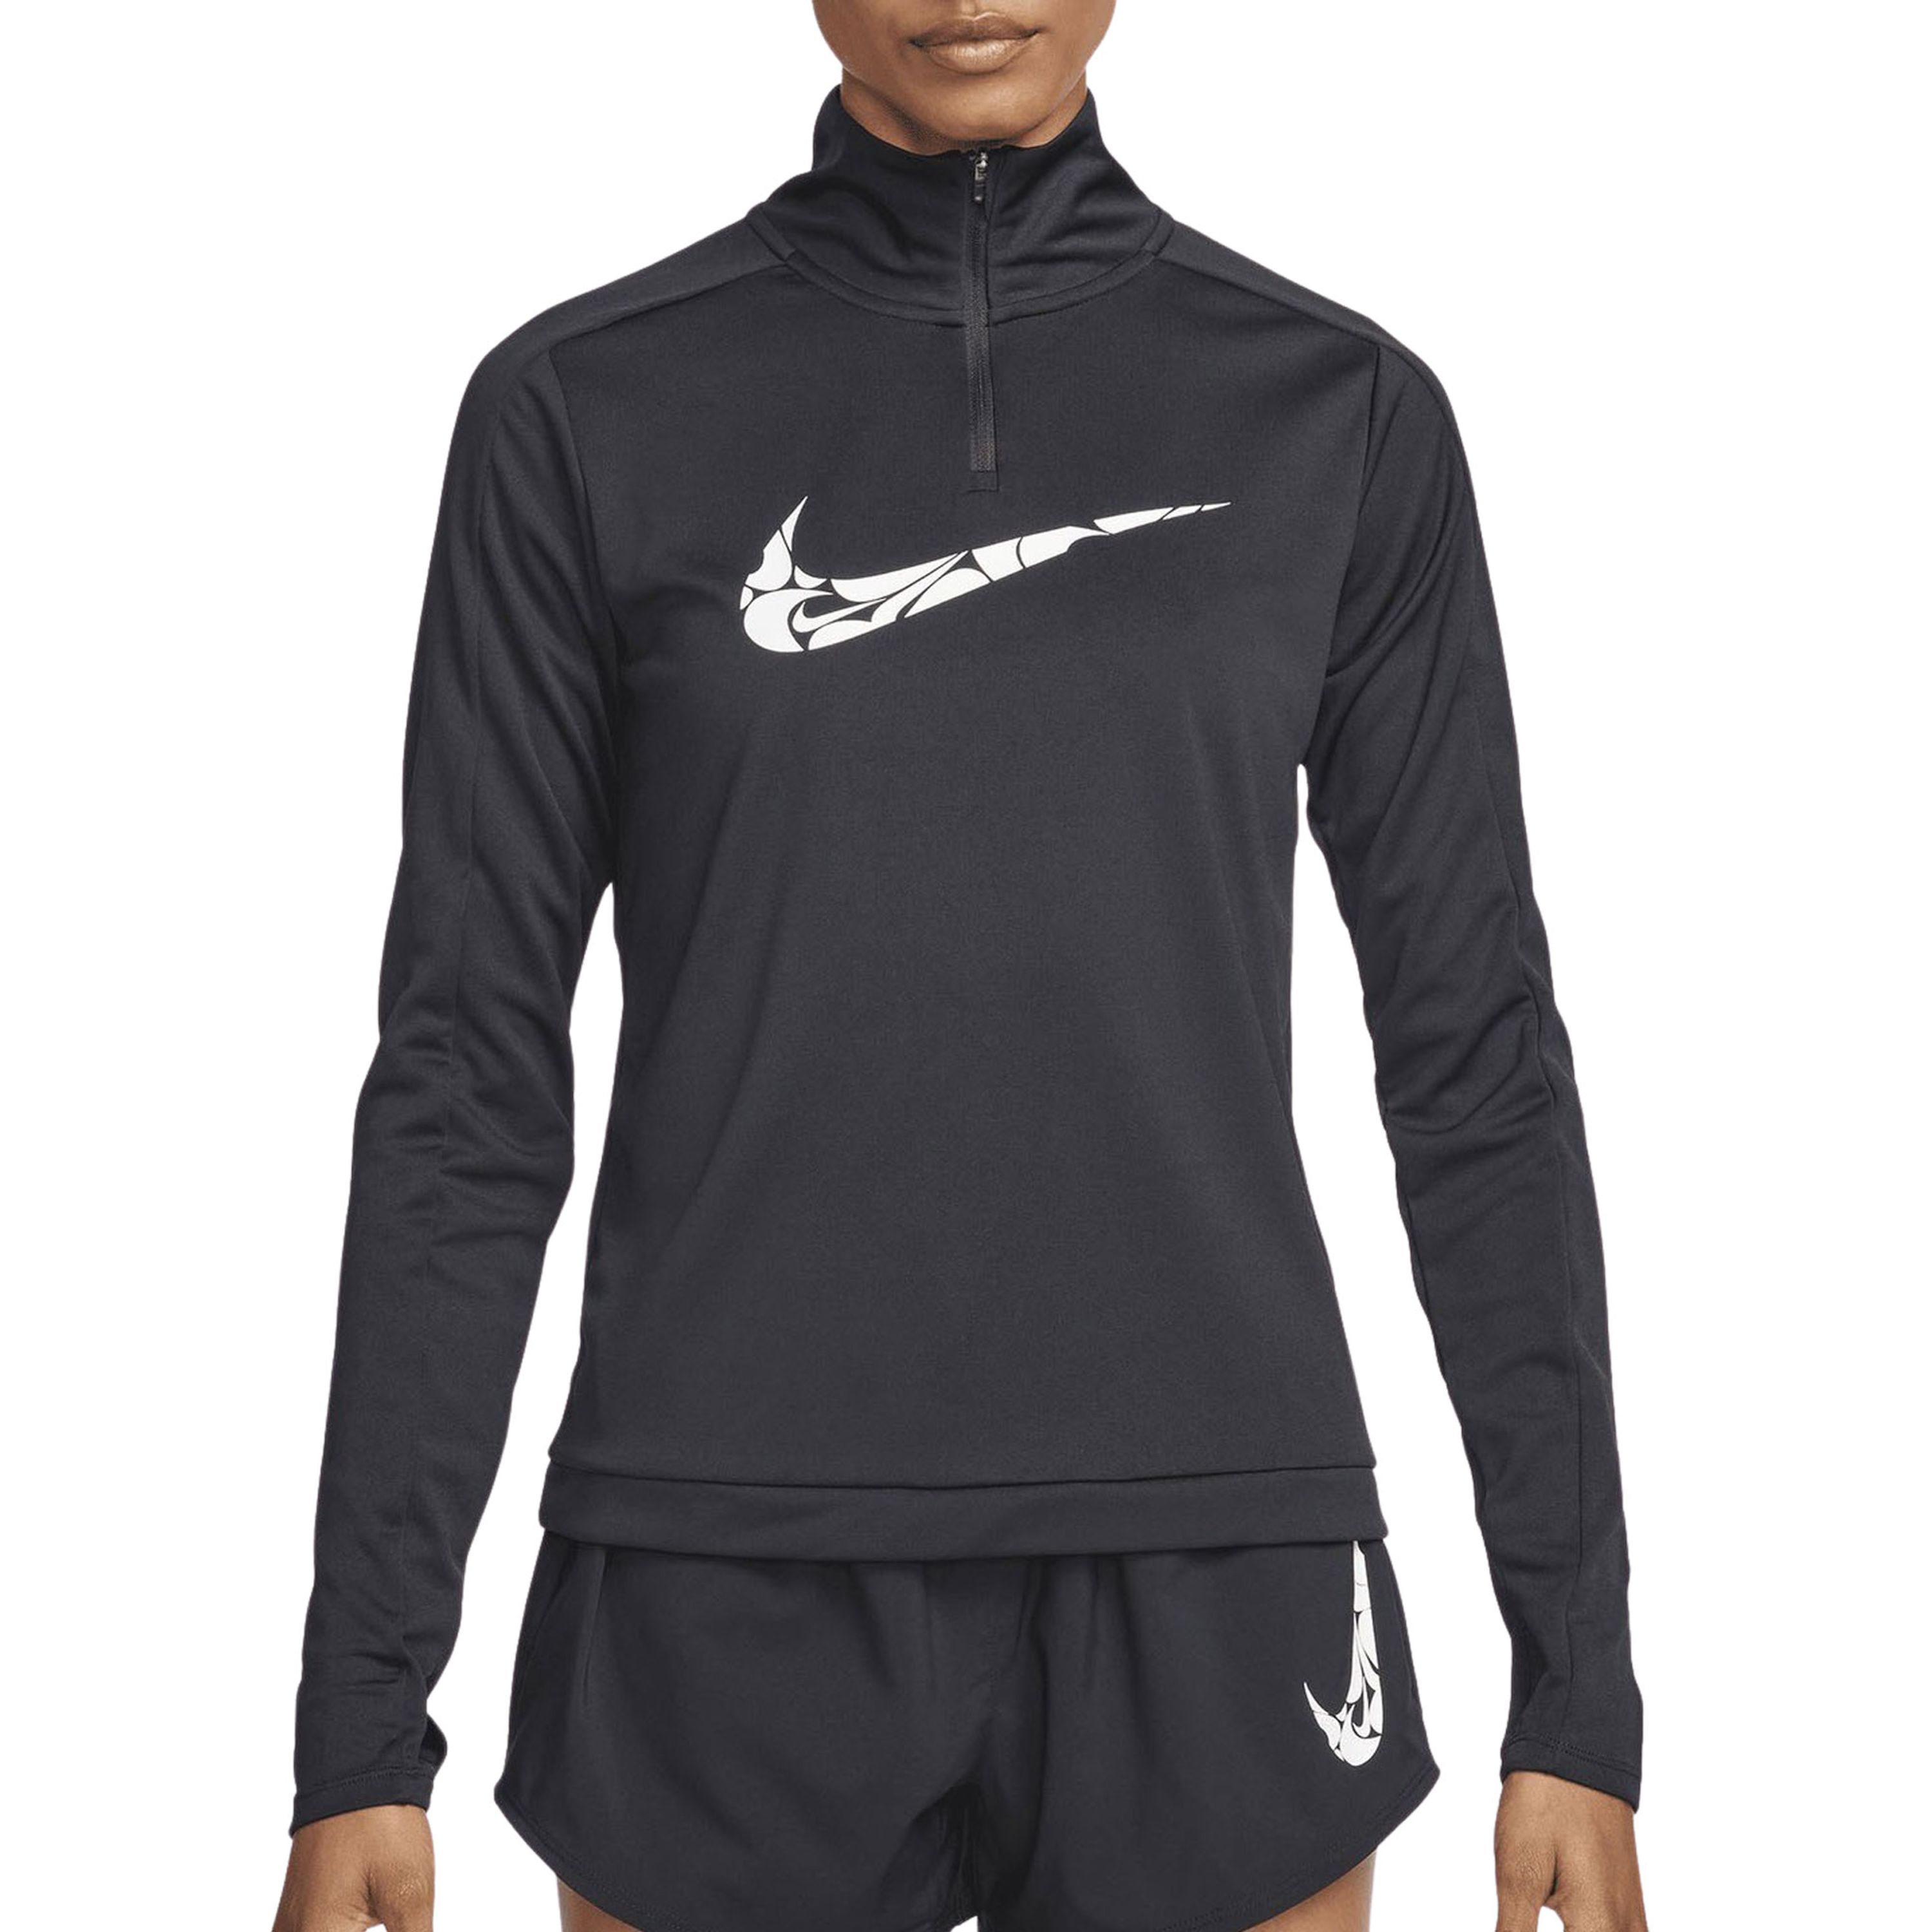 Nike Swoosh Dri-FIT Hardloopshirt Dames